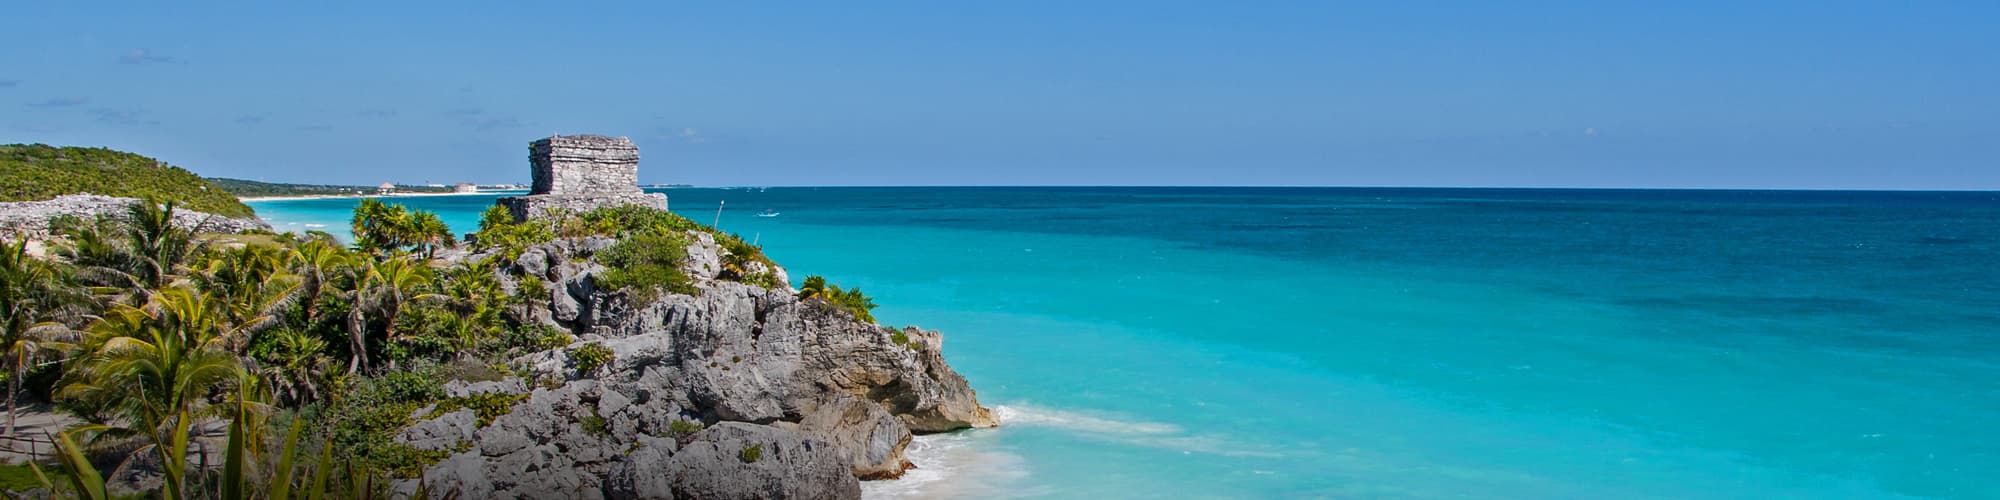 Voyage sur mesure Yucatan et Caraïbes © markross / Istock